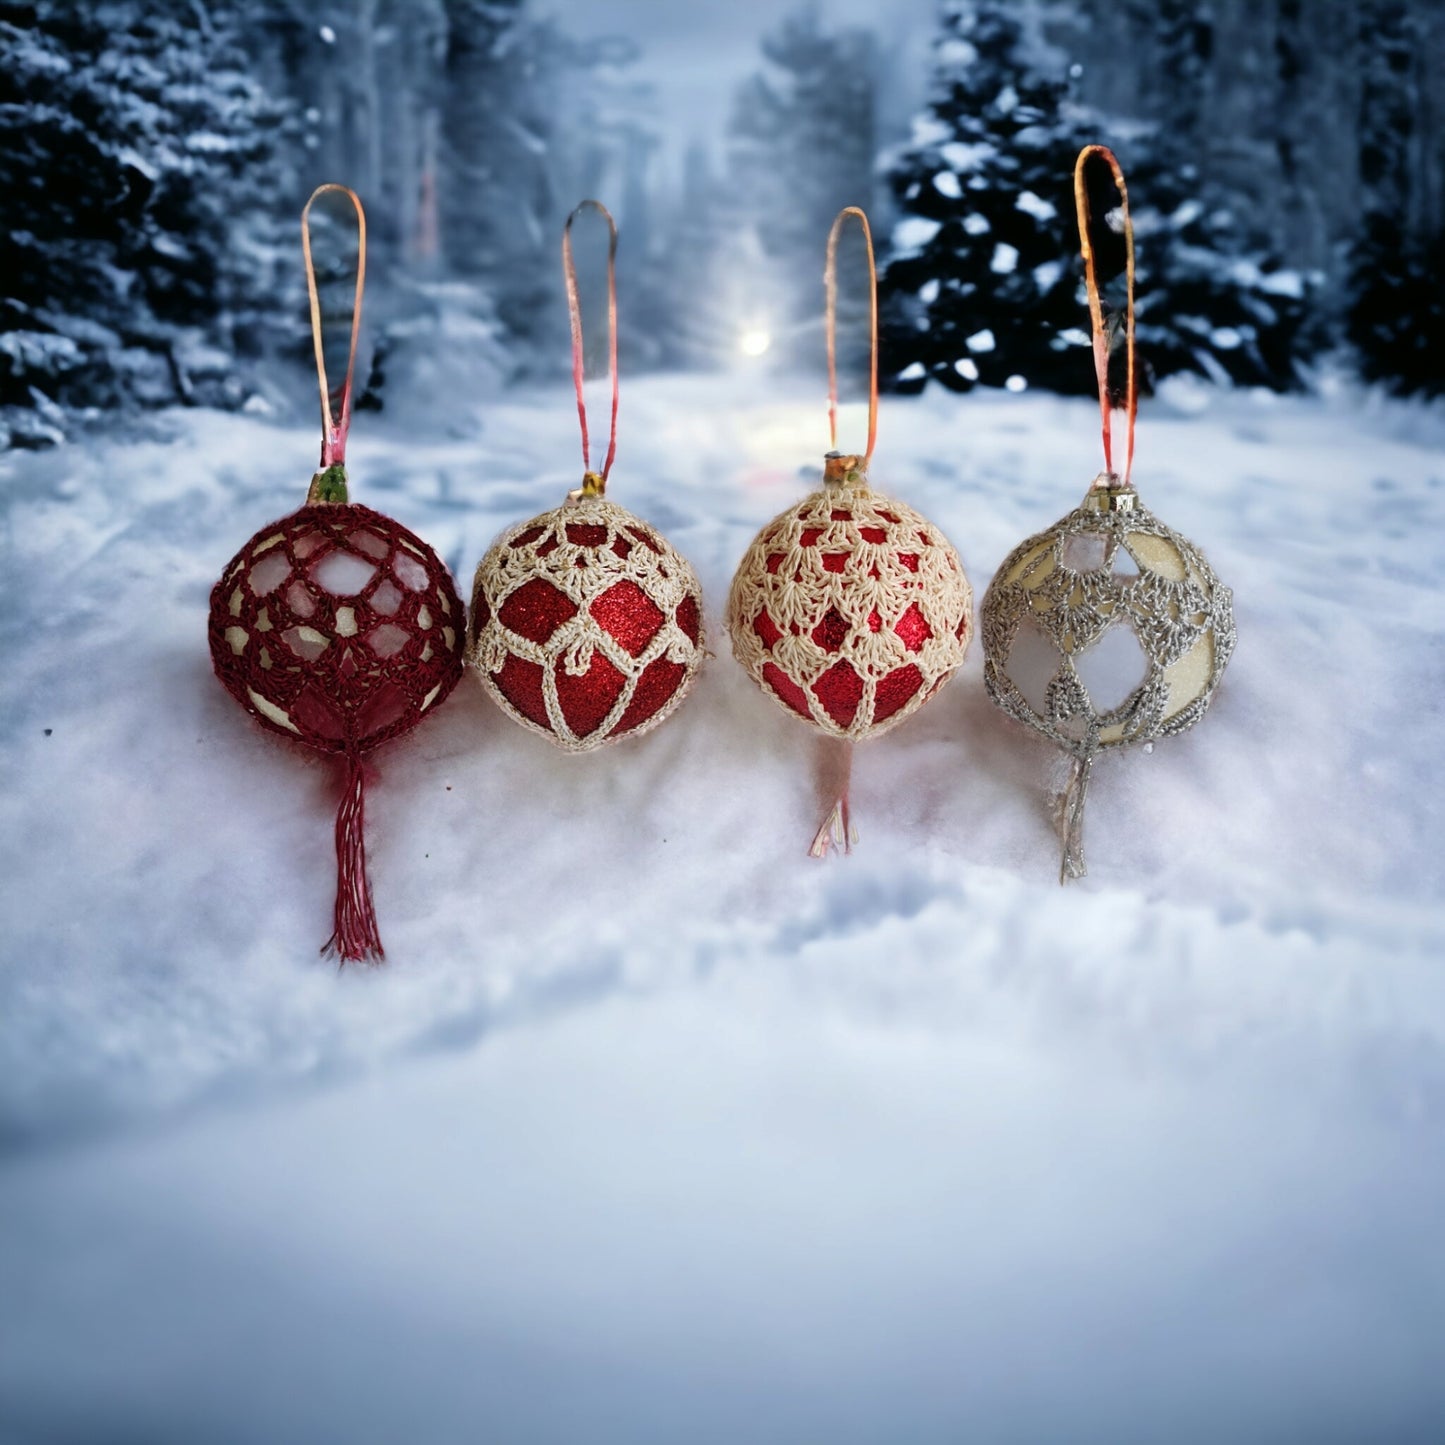 Crochet Christmas Ball Ornaments